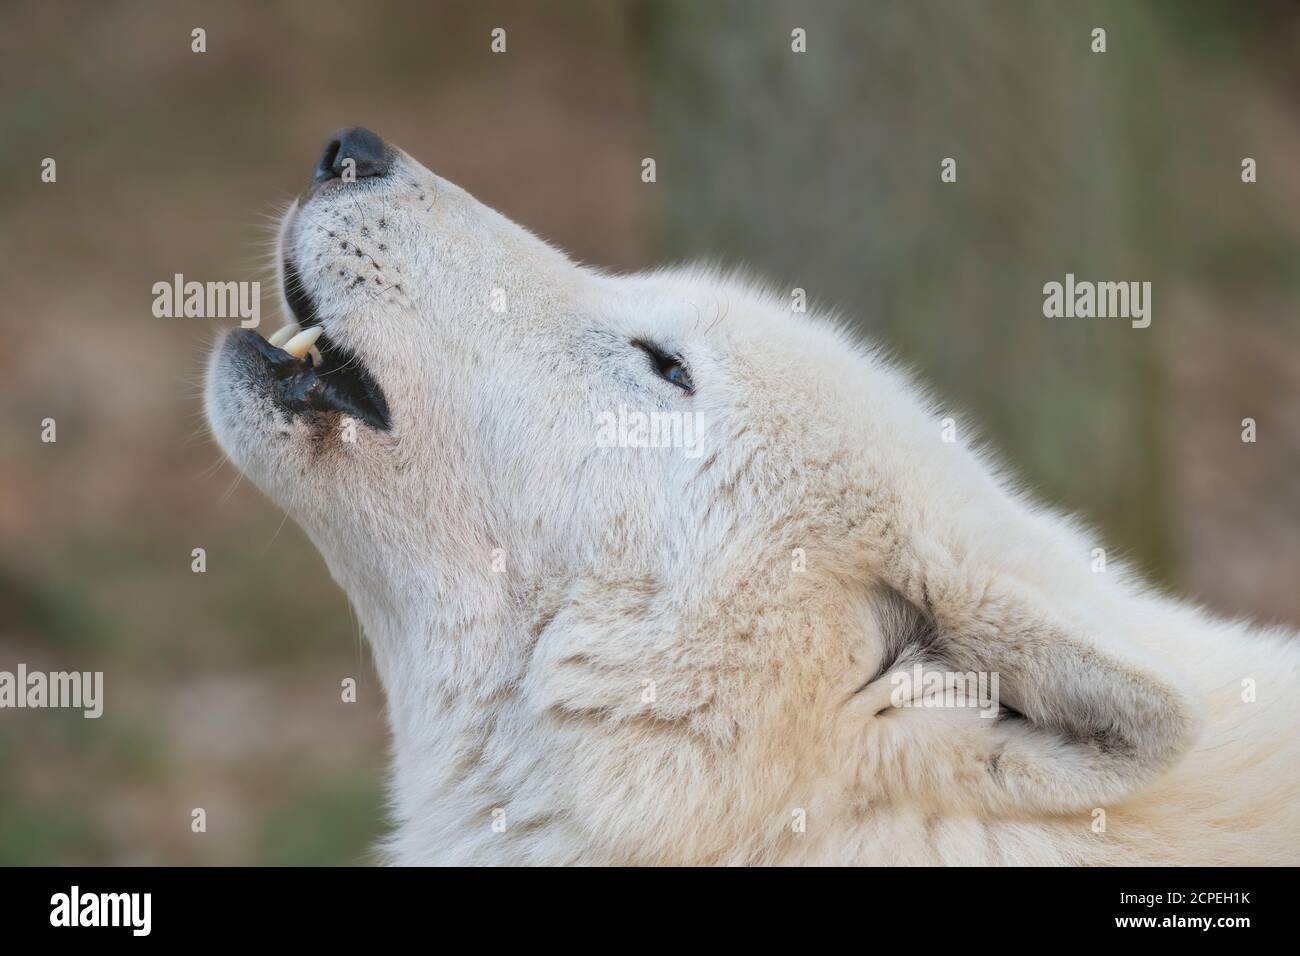 Lupo artico, lupo polare, canti lupus artos Foto Stock